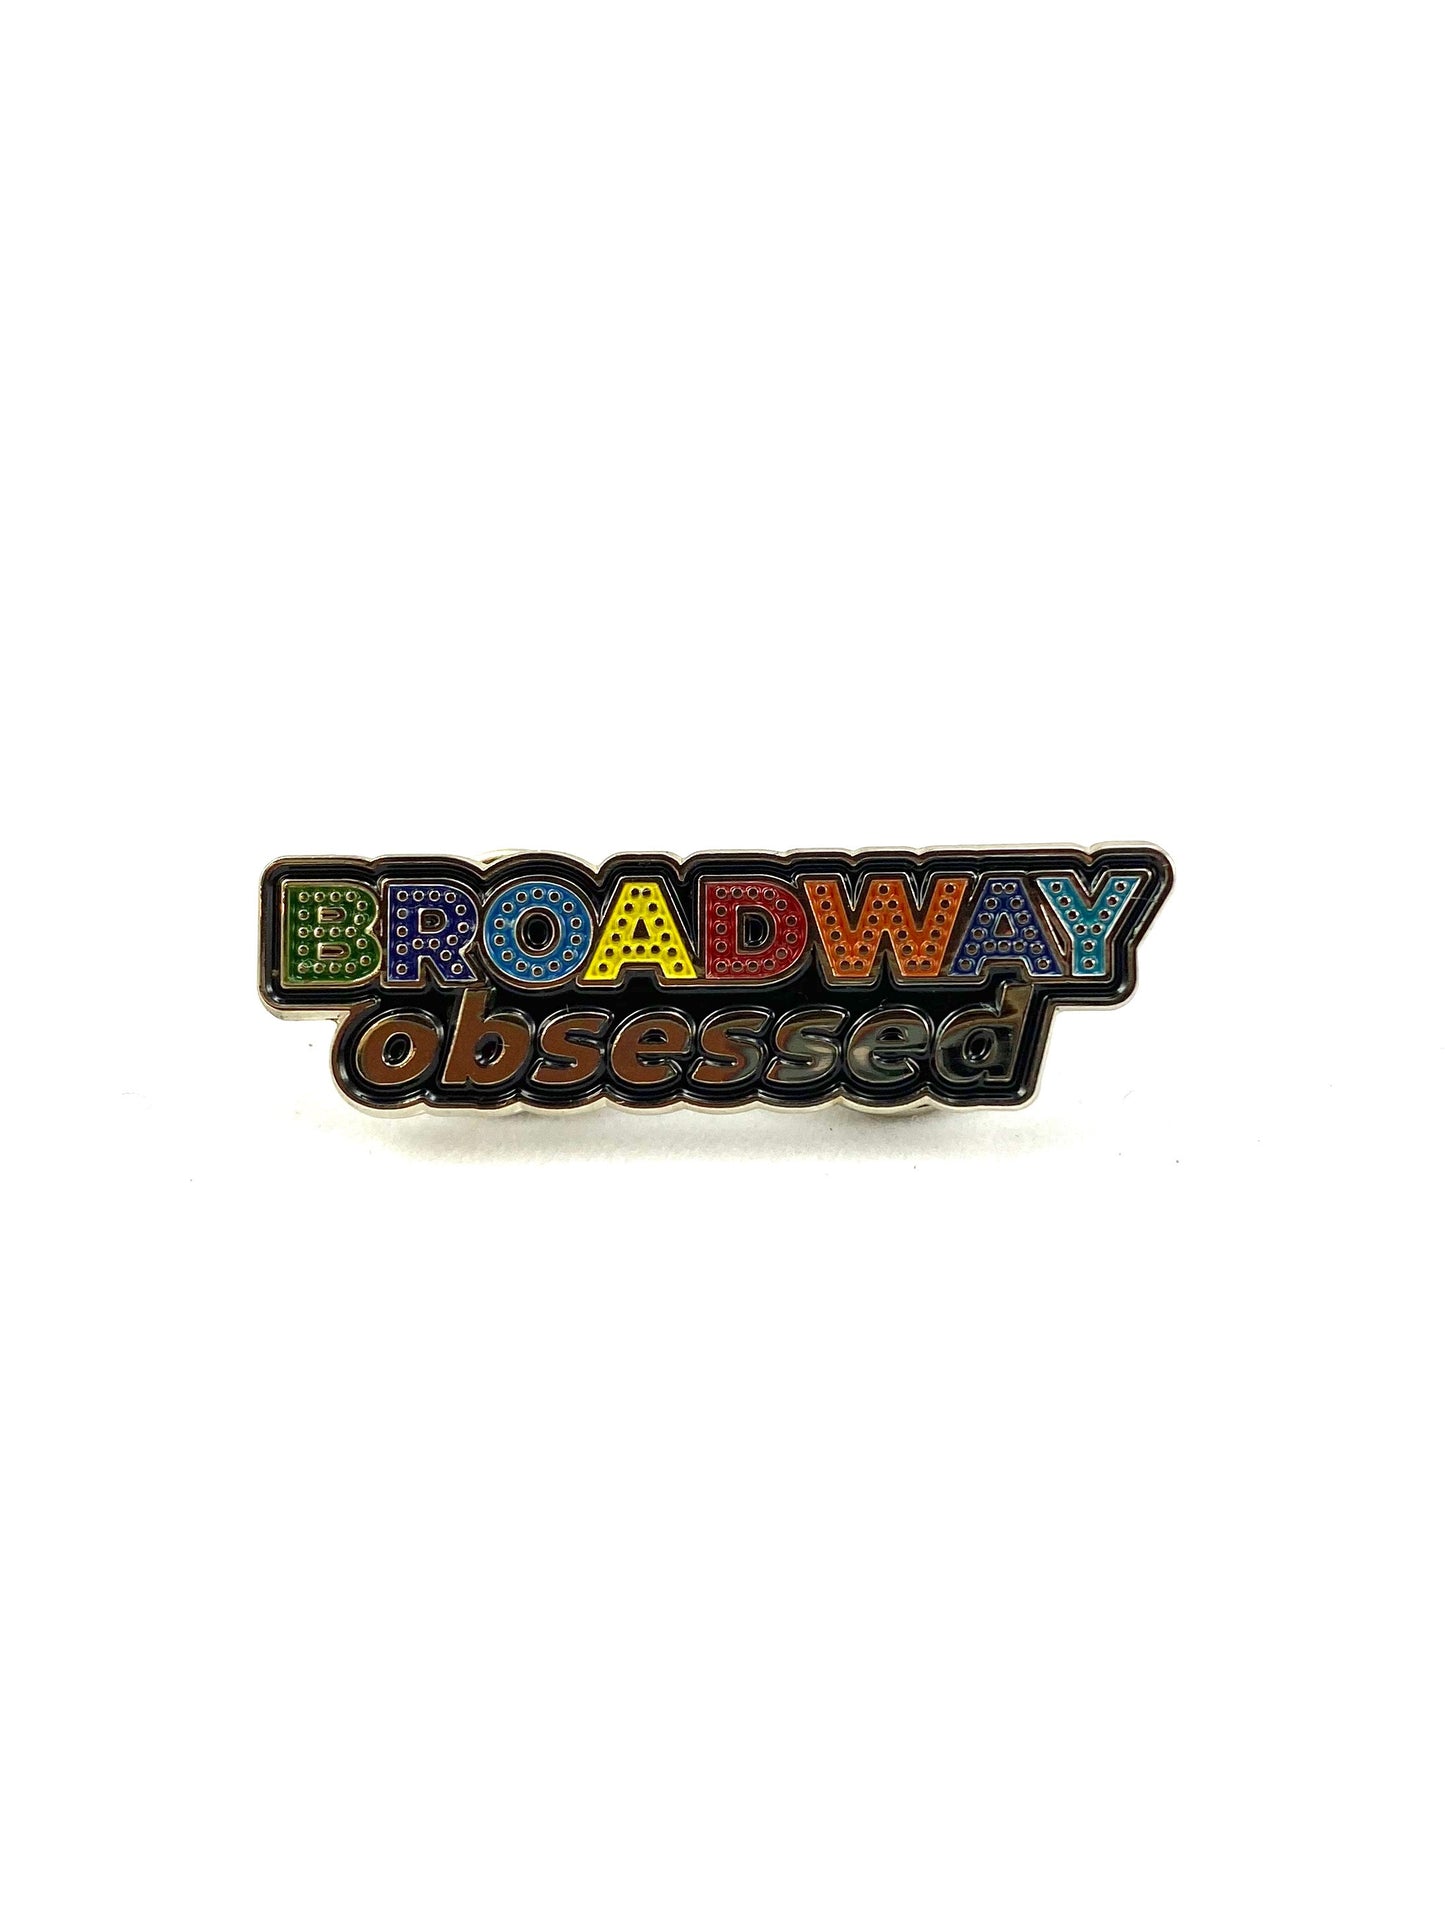 Broadway Obsessed Enamel Pin